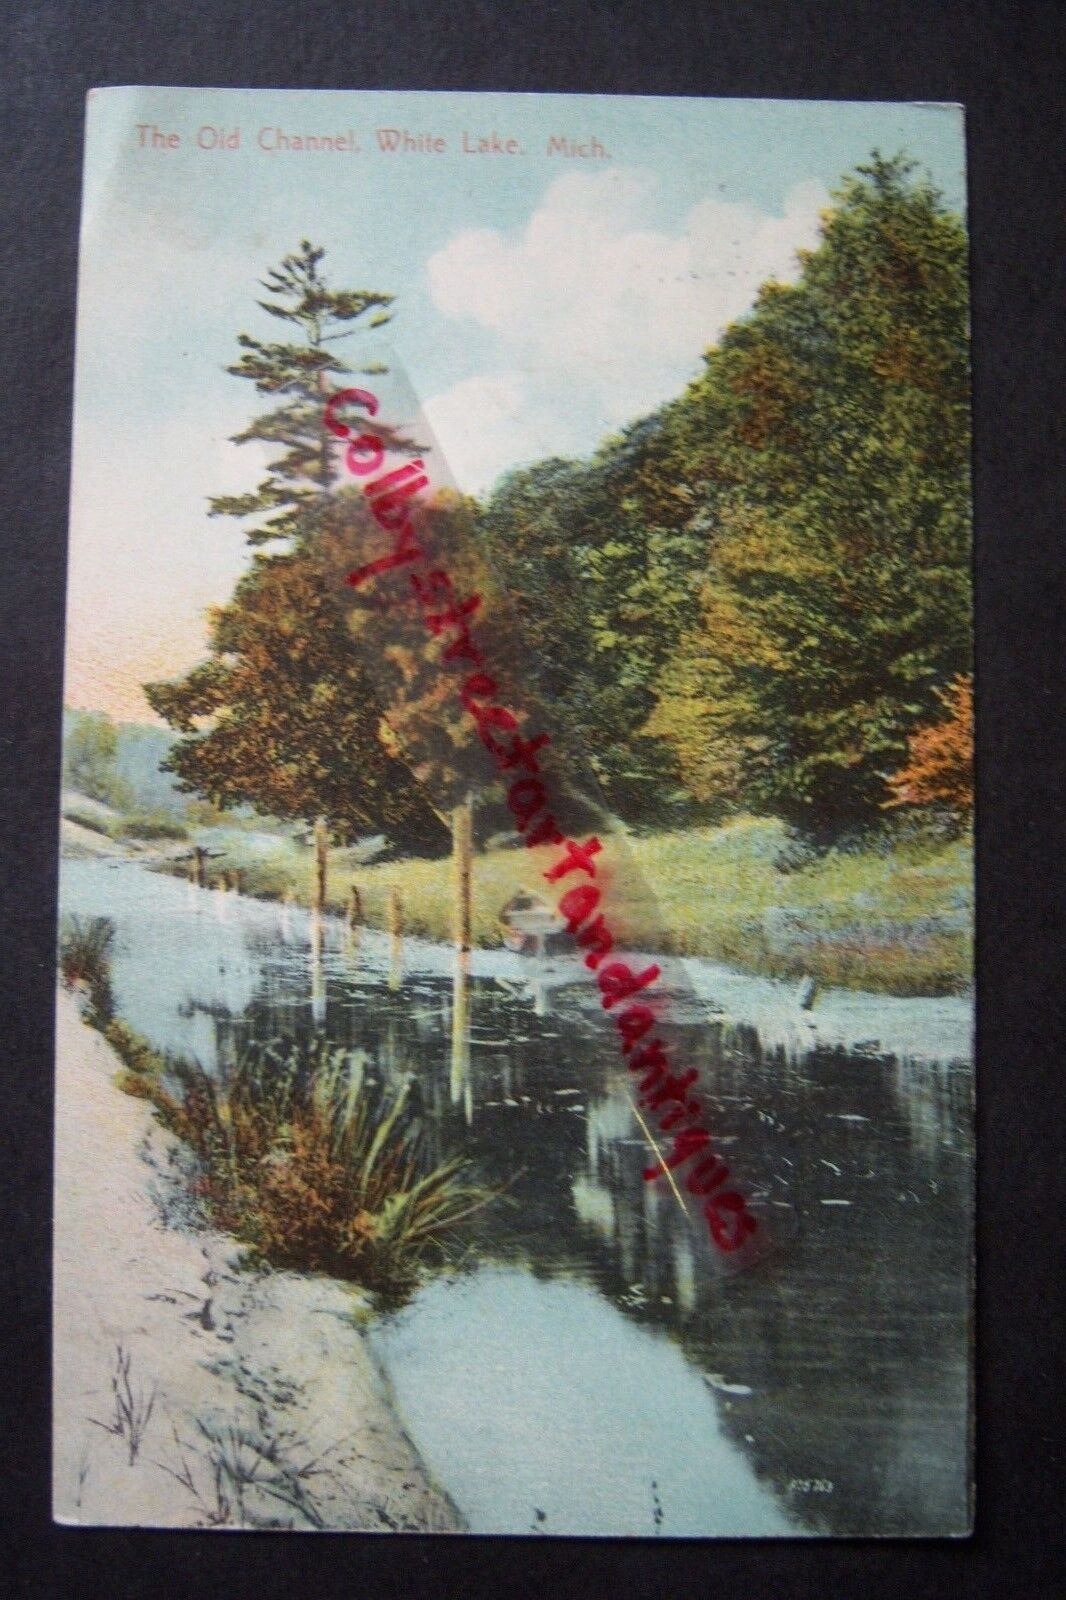 OLD CHANNEL White Lake, Montague, Michigan vintage postcard 1909